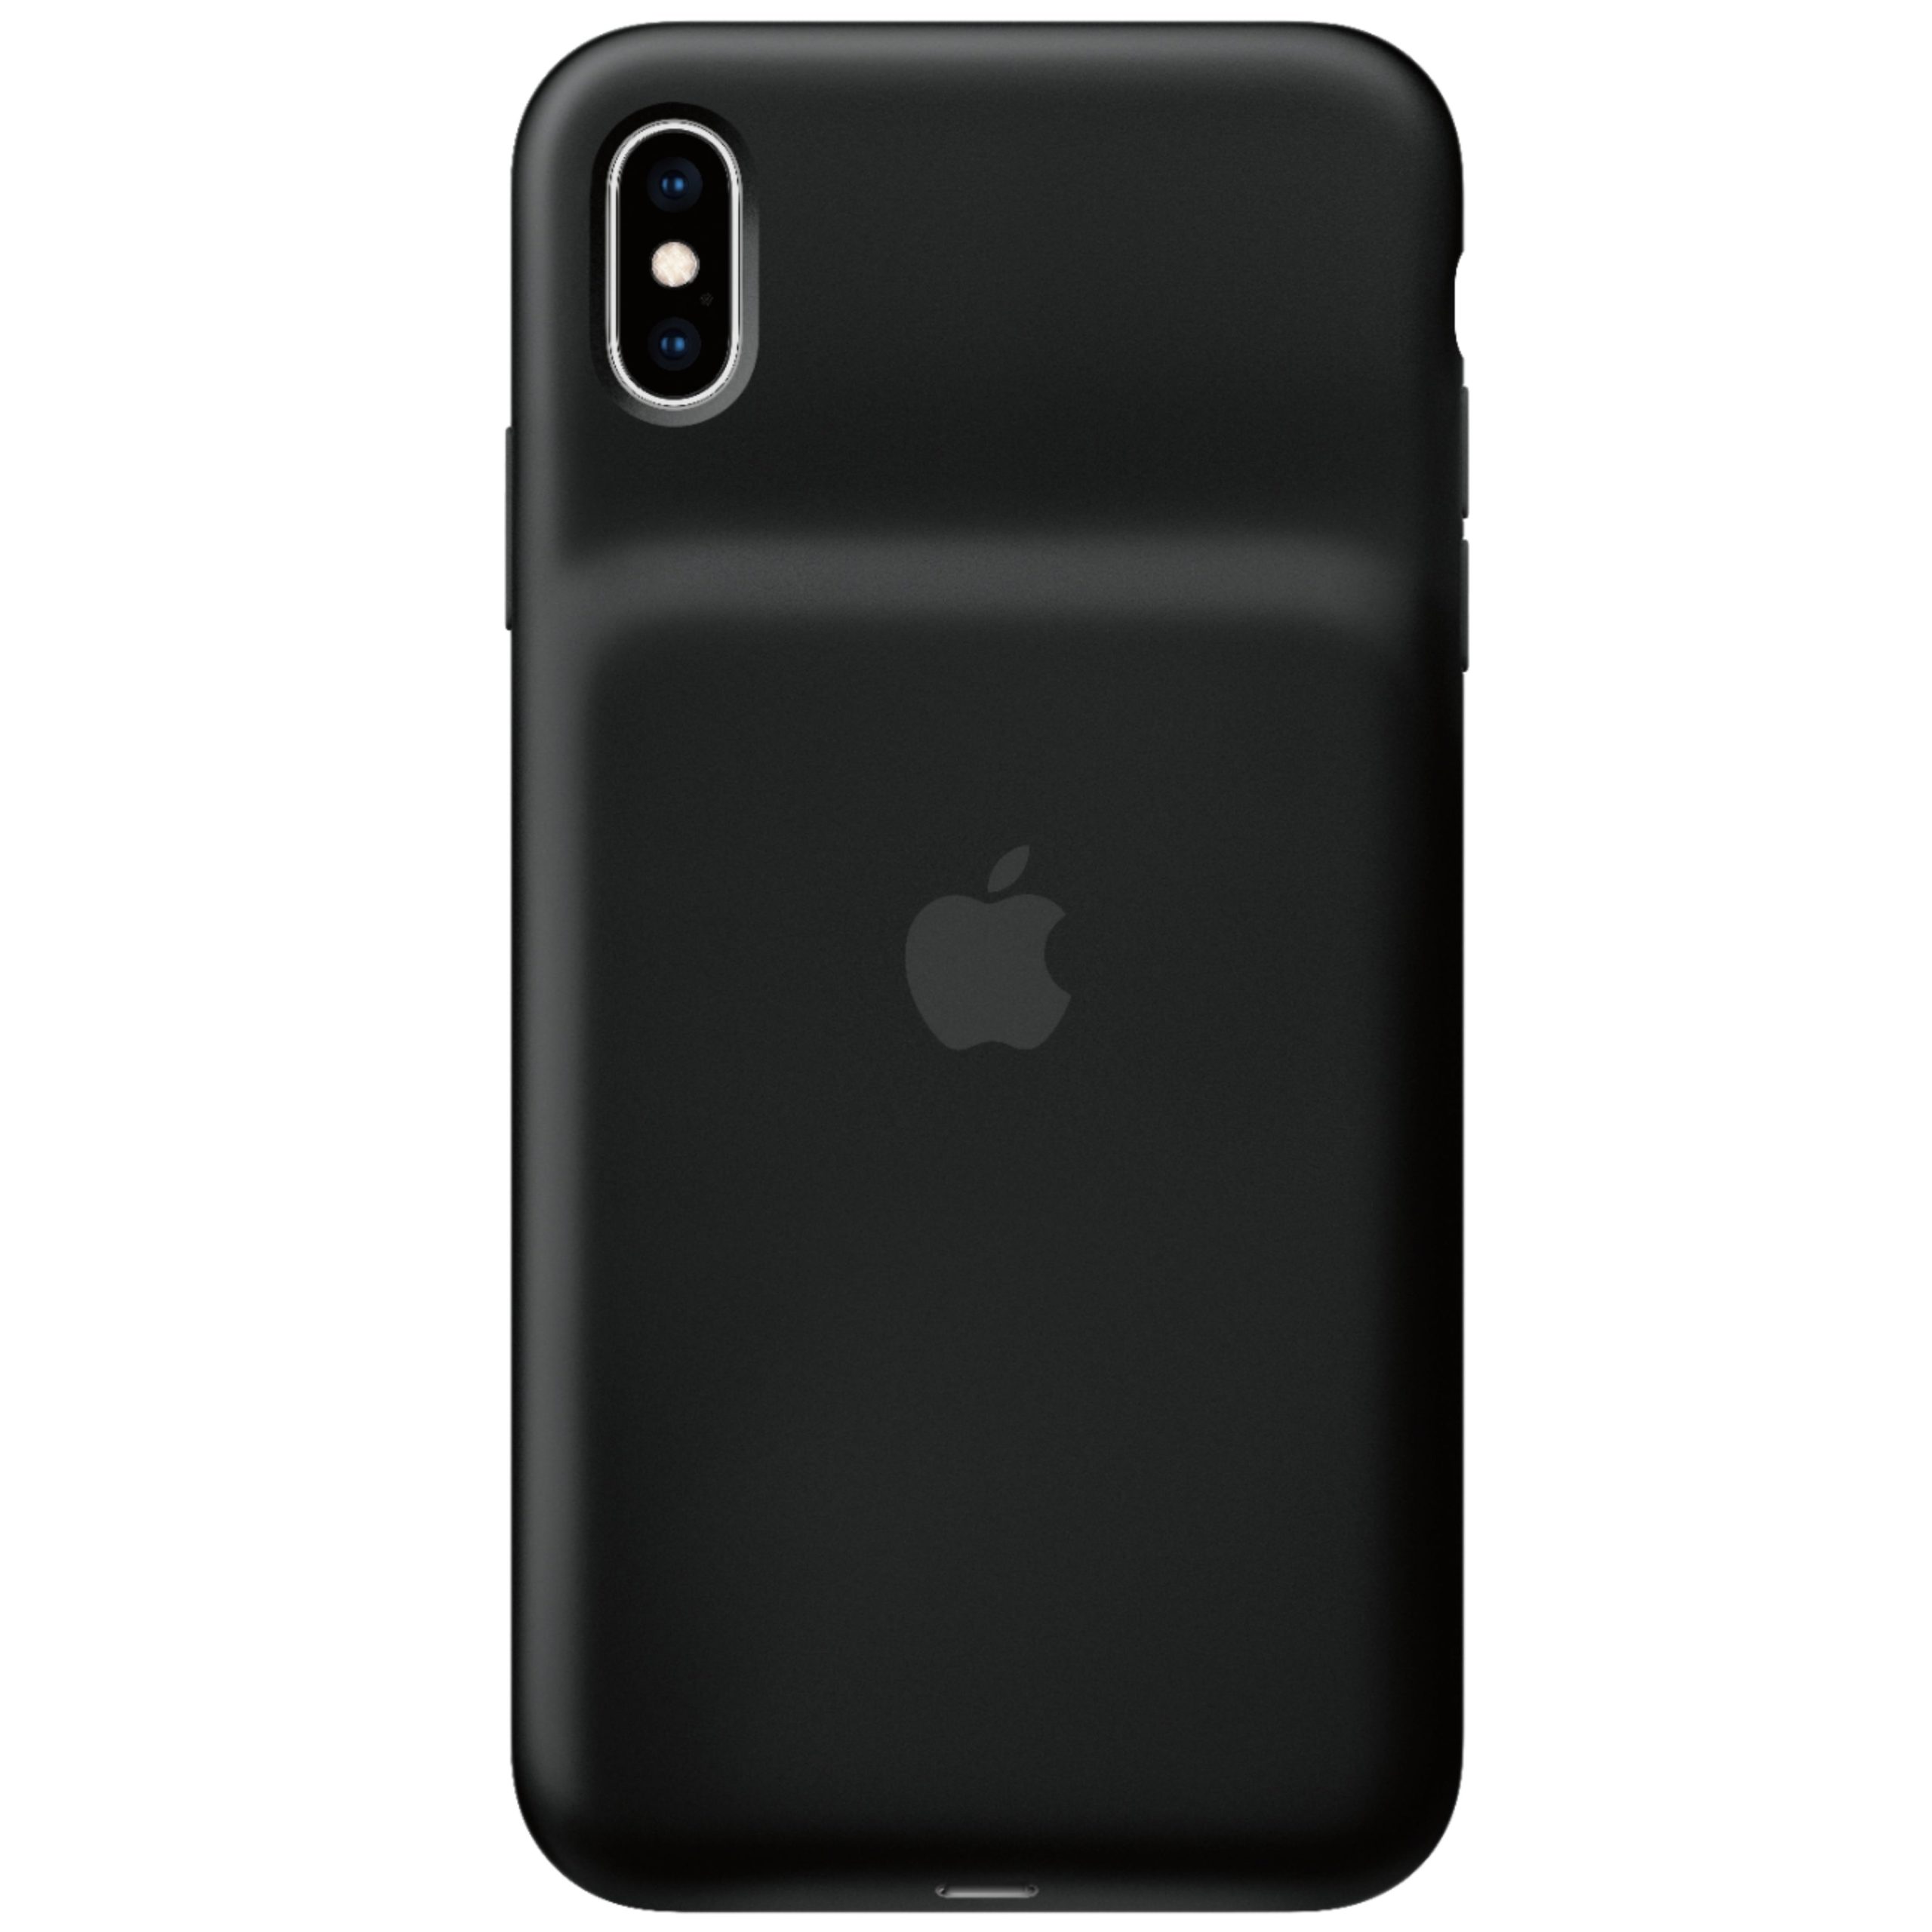 Apple - iPhone XS Max Smart Battery Case - Black [MRXQ2LL/A]